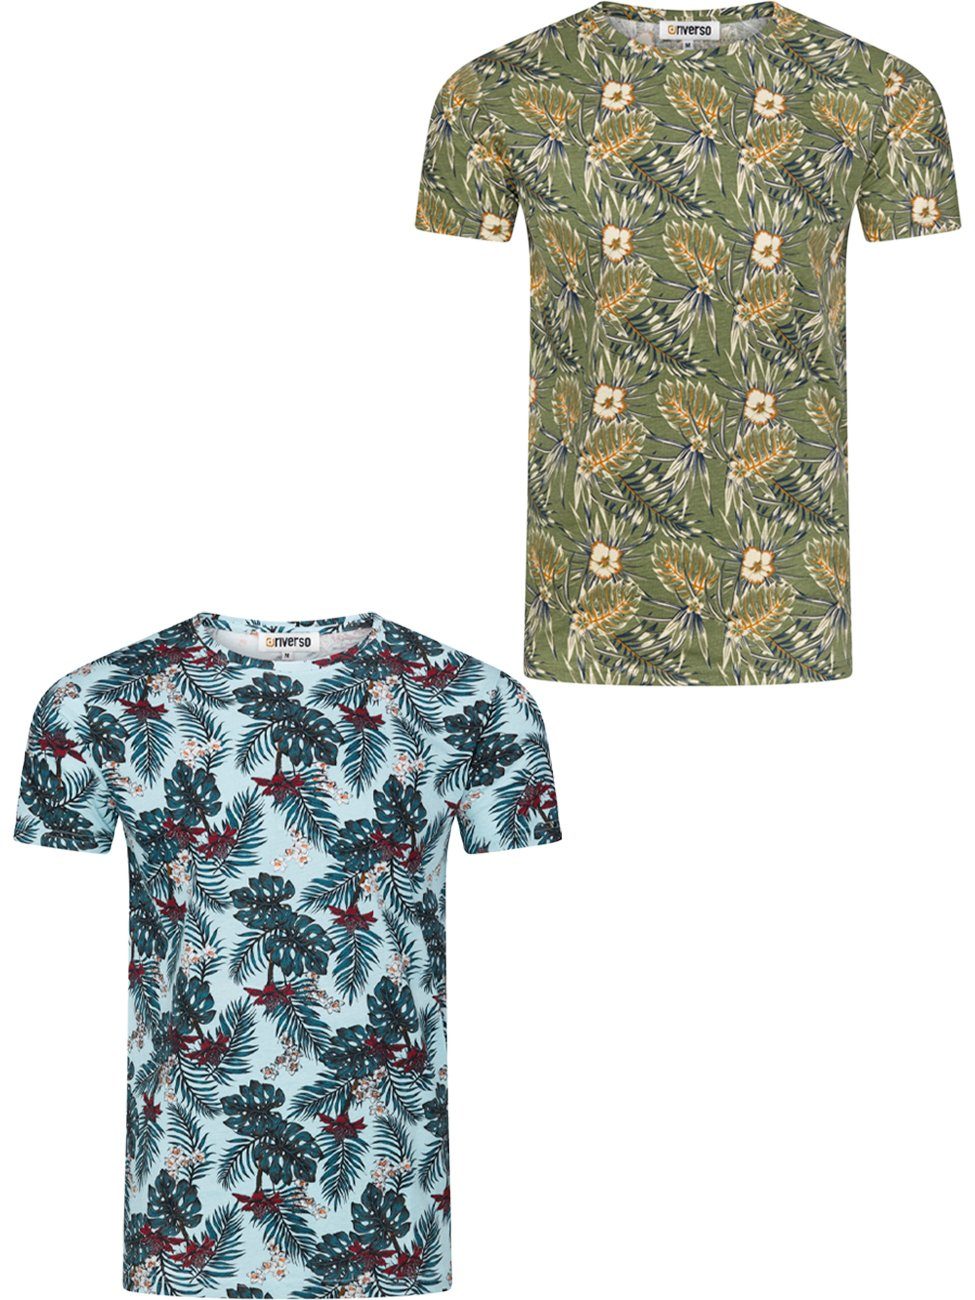 riverso T-Shirt Herren 100% mit 3 RIVBill Baumwolle Printshirt Fit Regular Hawaiishirt aus Rundhalsausschnitt (2-tlg) Farbmix Kurzarm